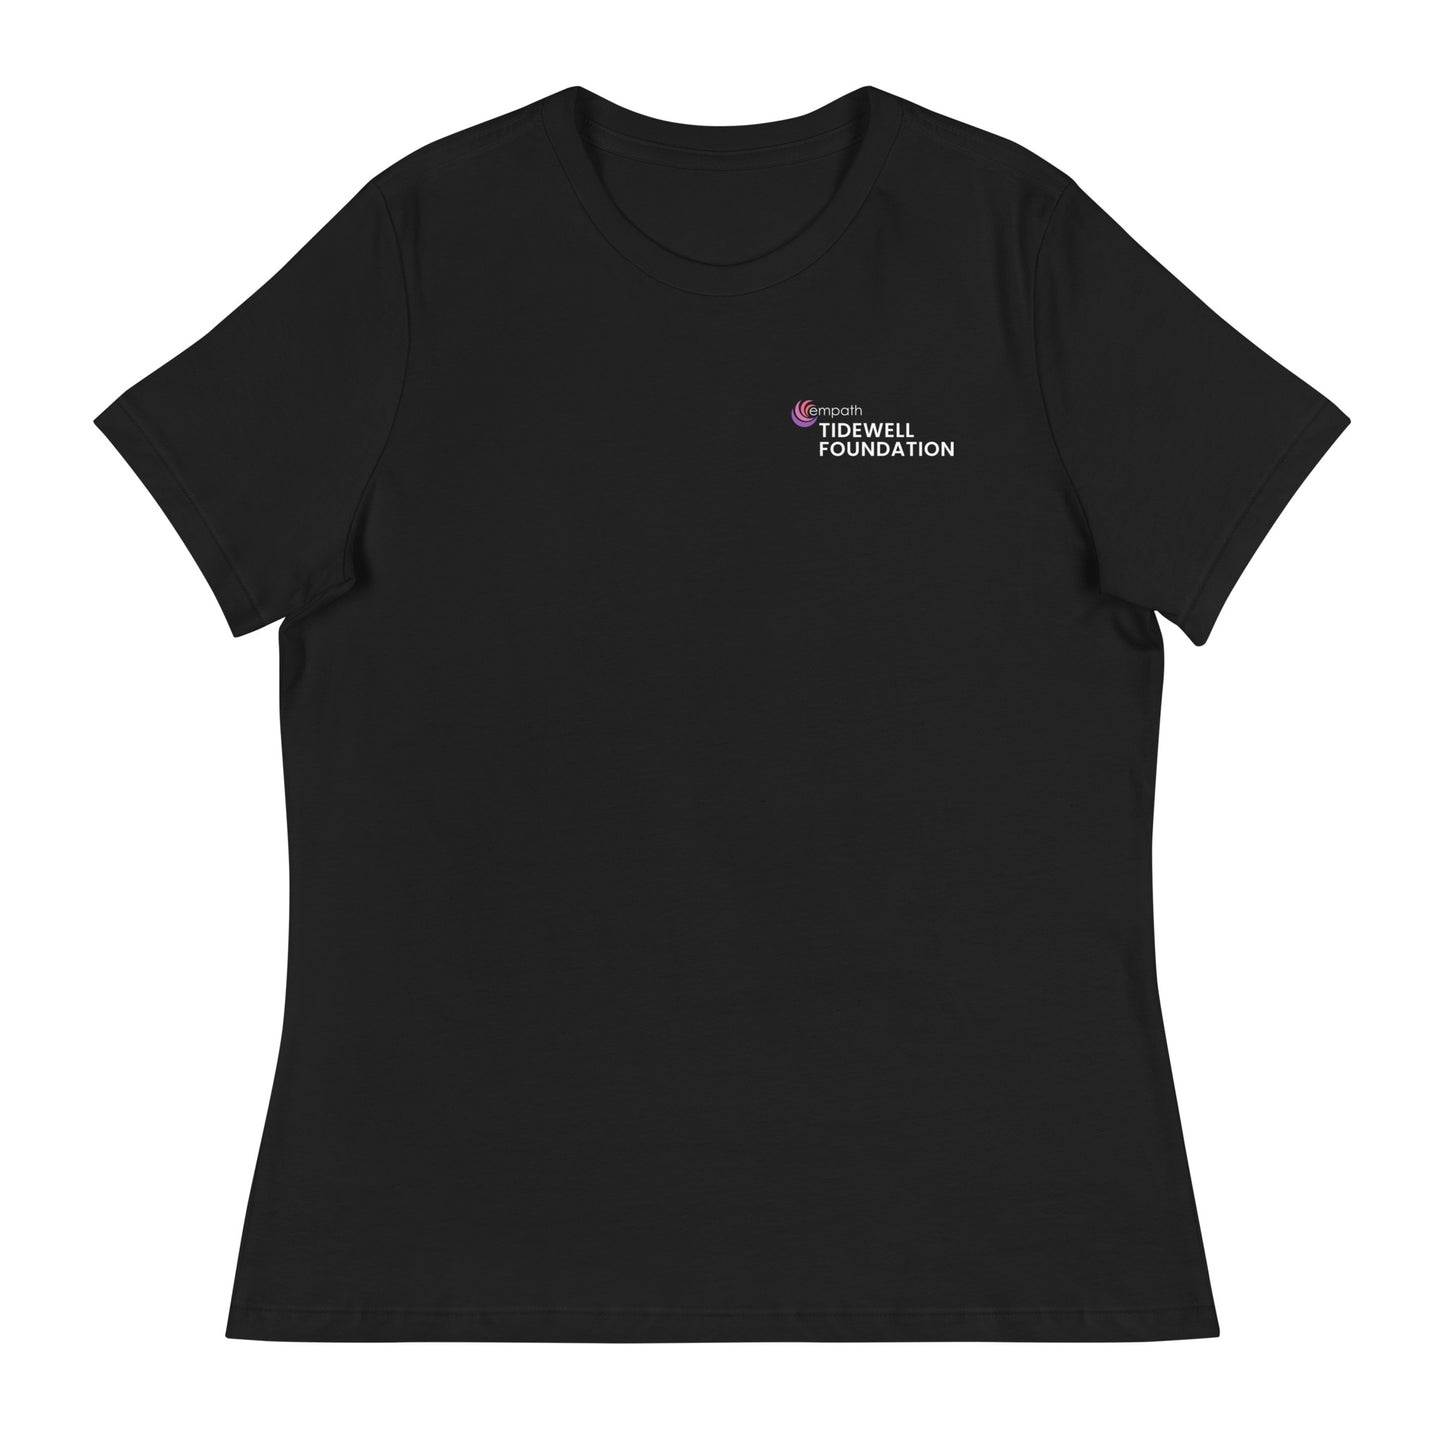 Women's Classic T-shirt - Tidewell Foundation